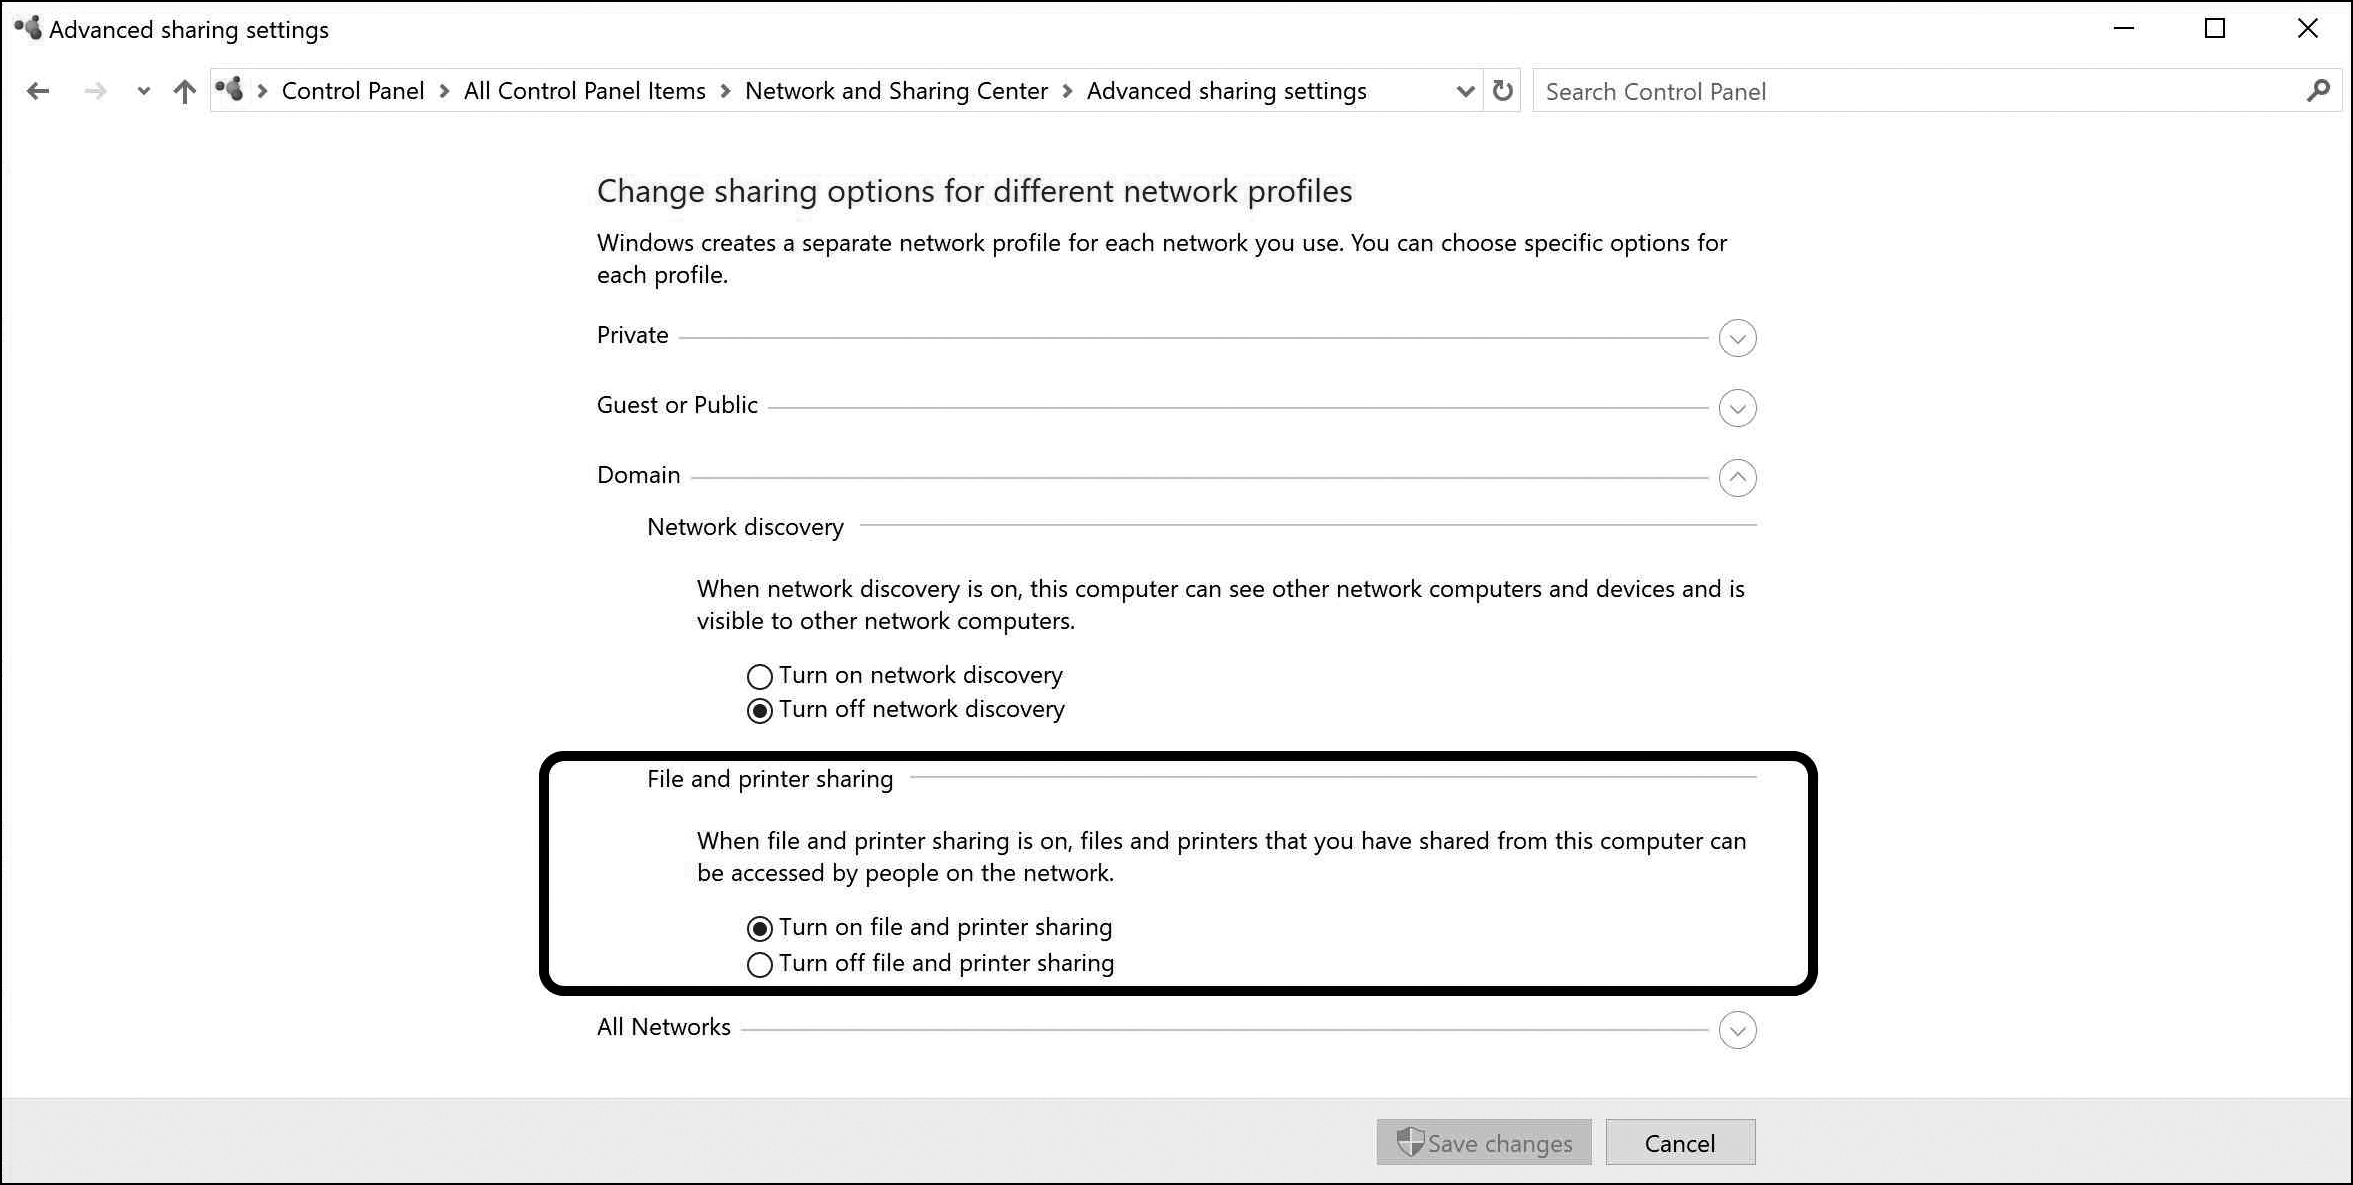 A screenshot of the advanced sharing settings window is shown.